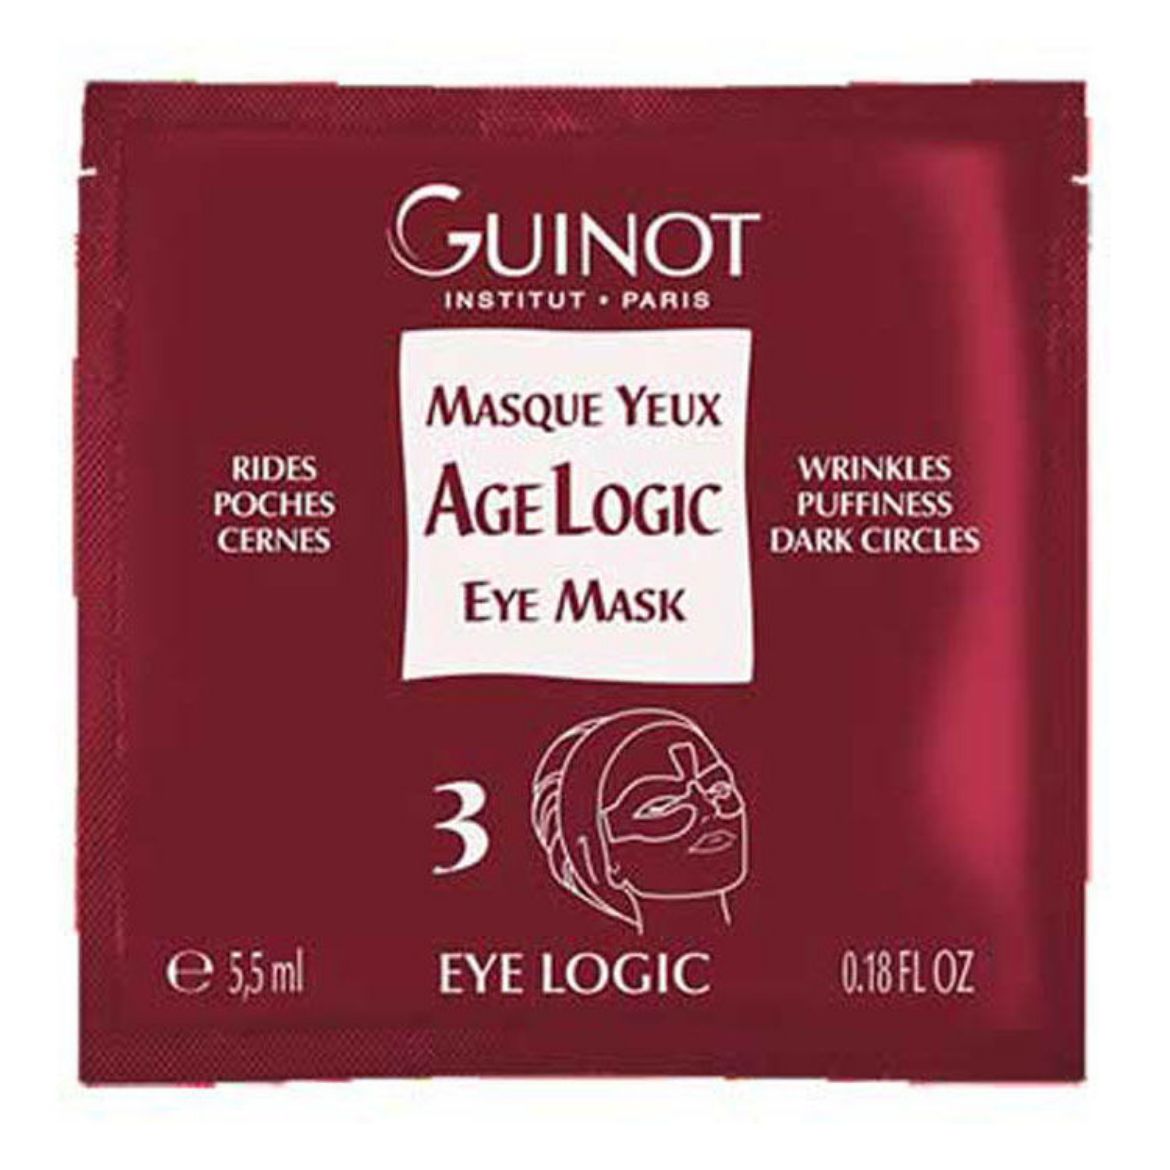 Image of Guinot Masque Yeux Age Logic (4x)